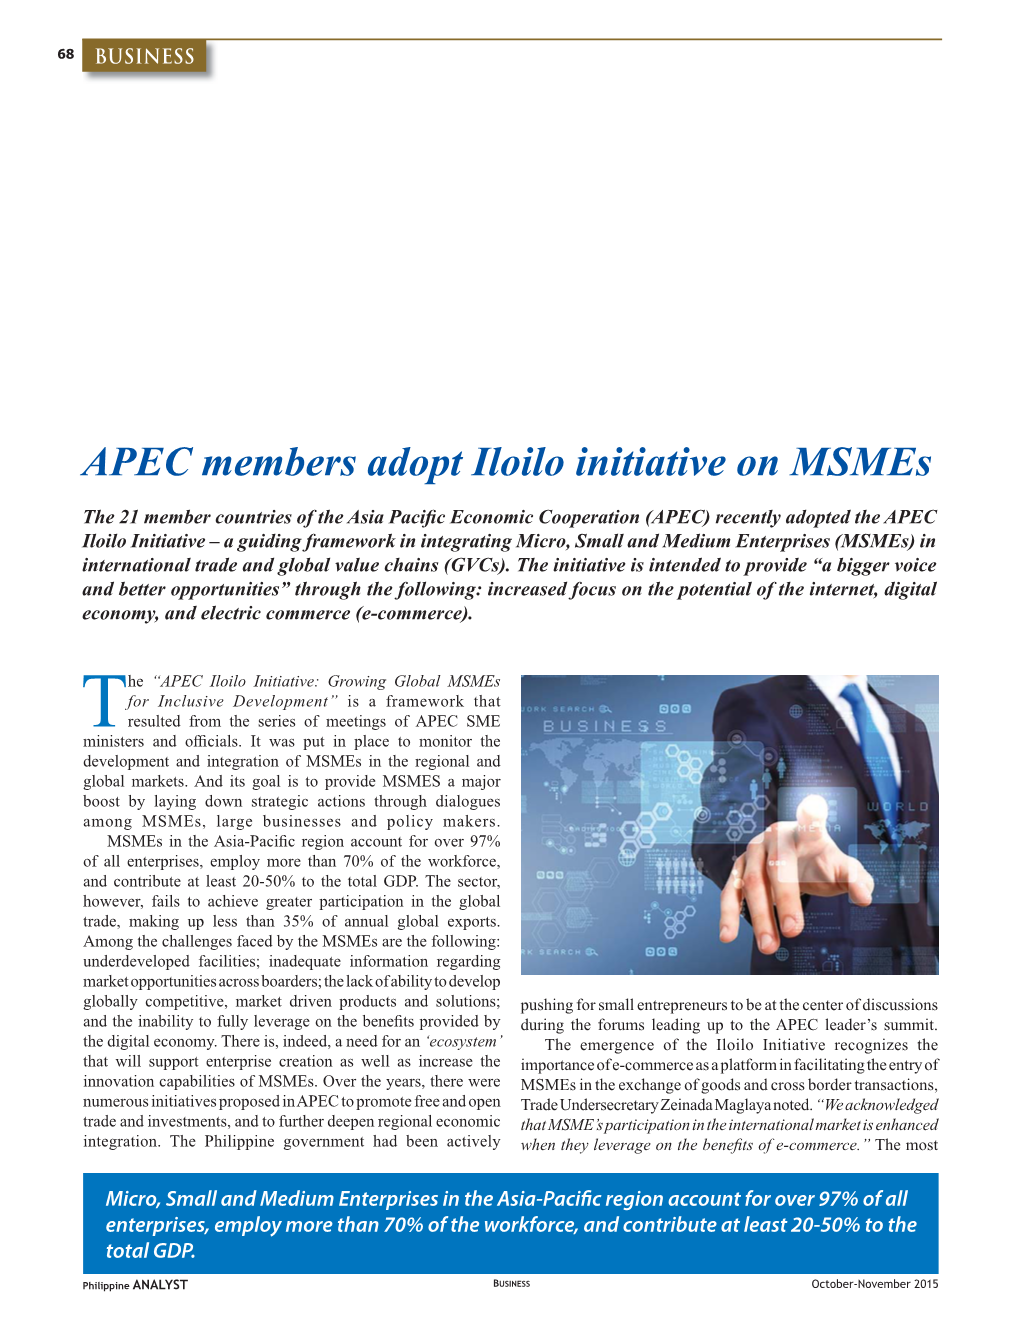 APEC Members Adopt Iloilo Initiative on Msmes